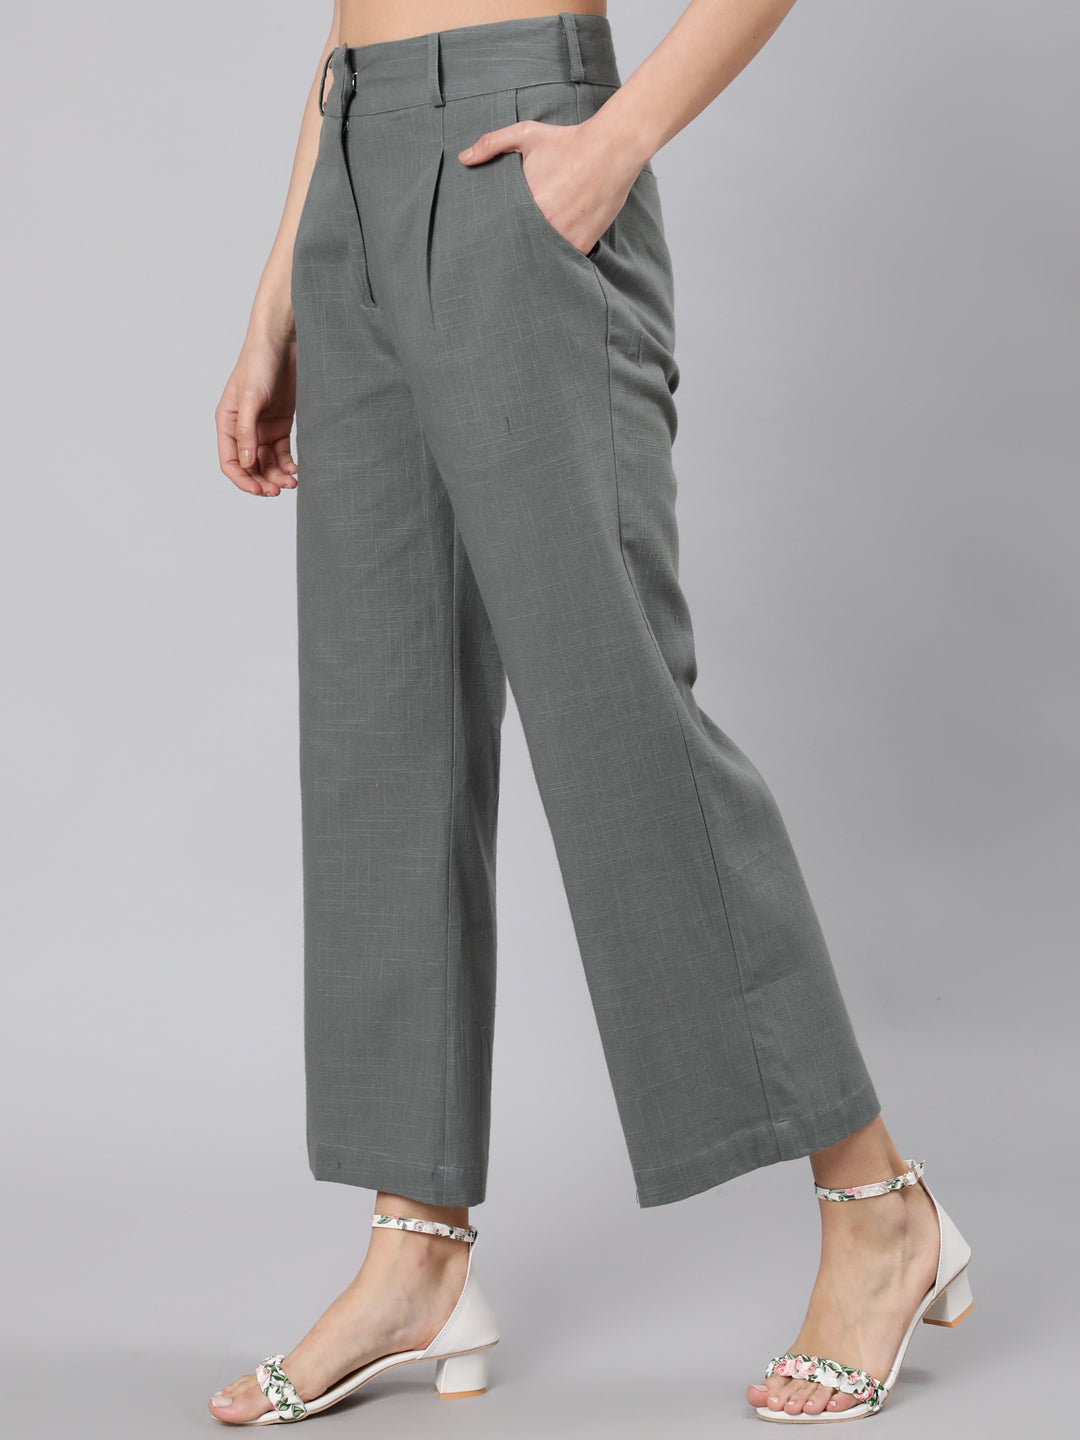 Shop best casual pants for women